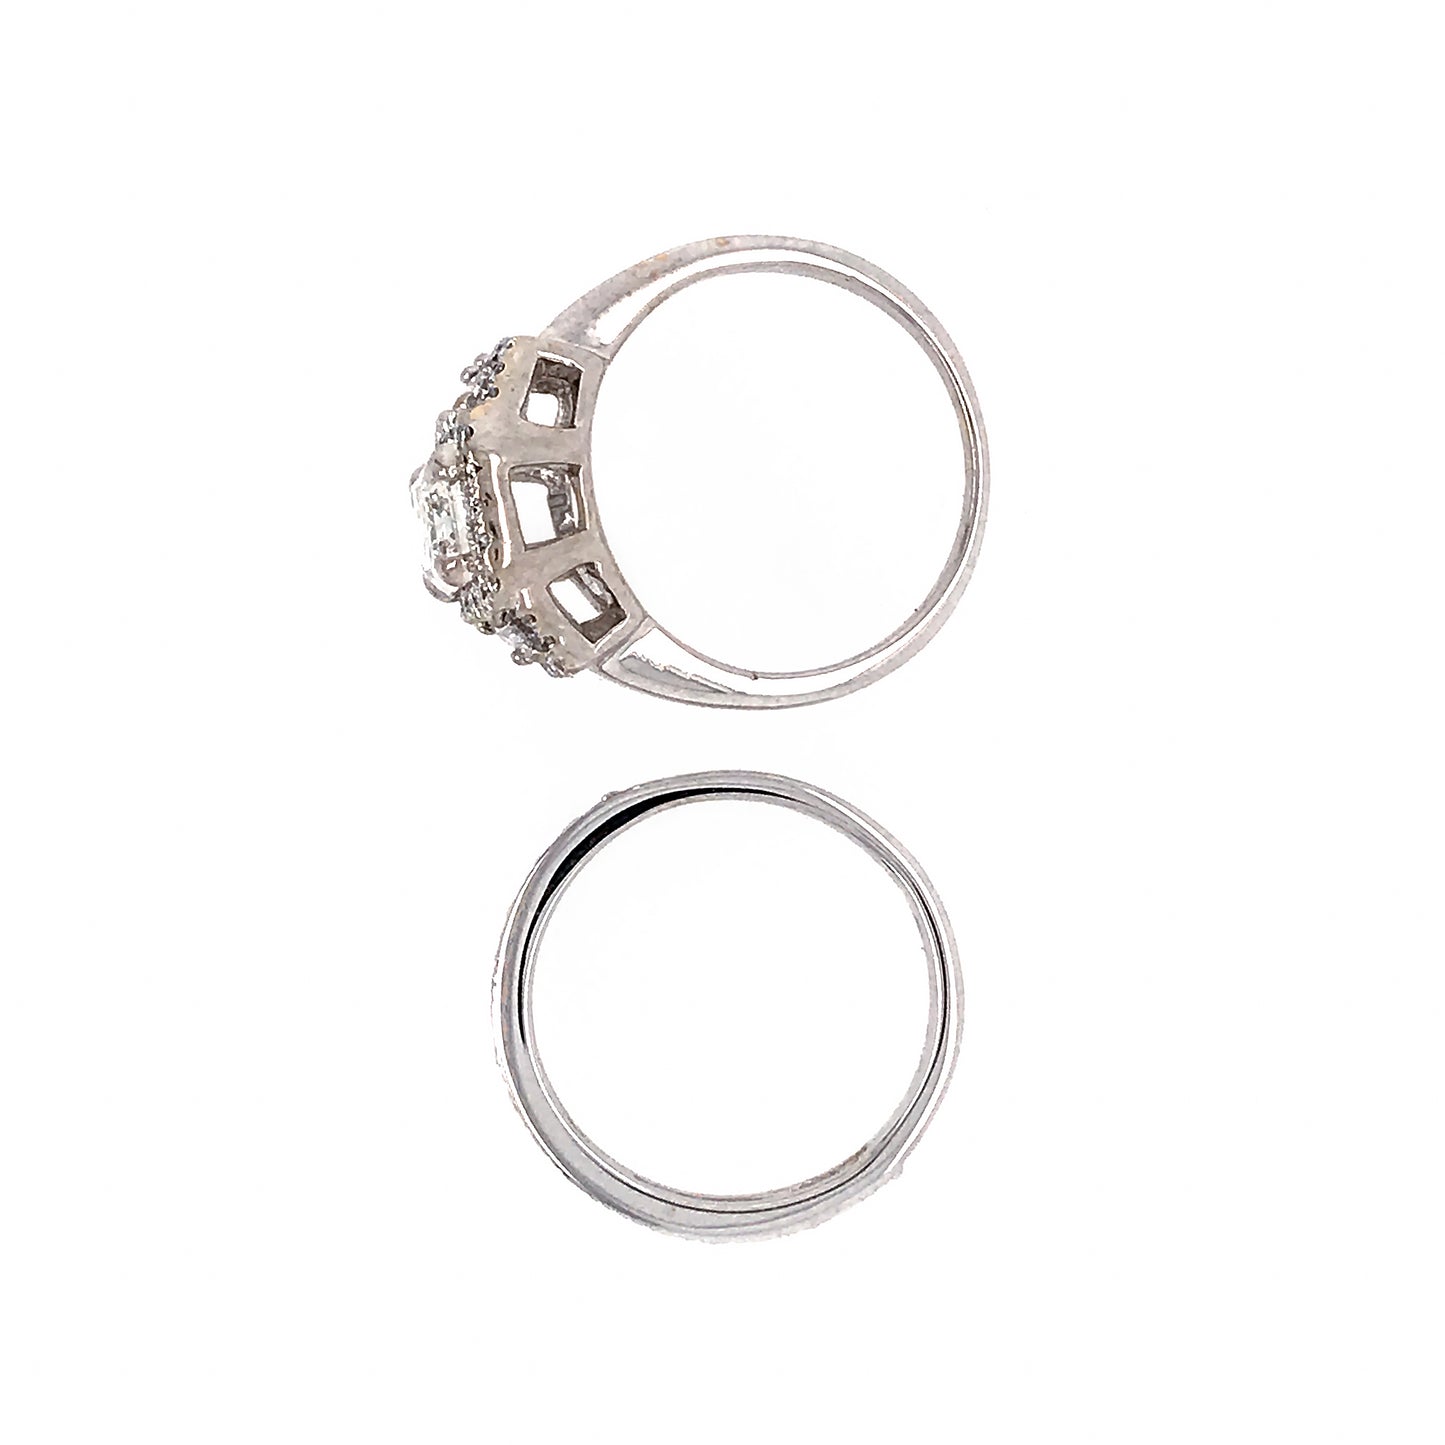 GIA Certified 1.33 Carat Emerald Cut Diamond Engagement Ring with Matching Diamond Band